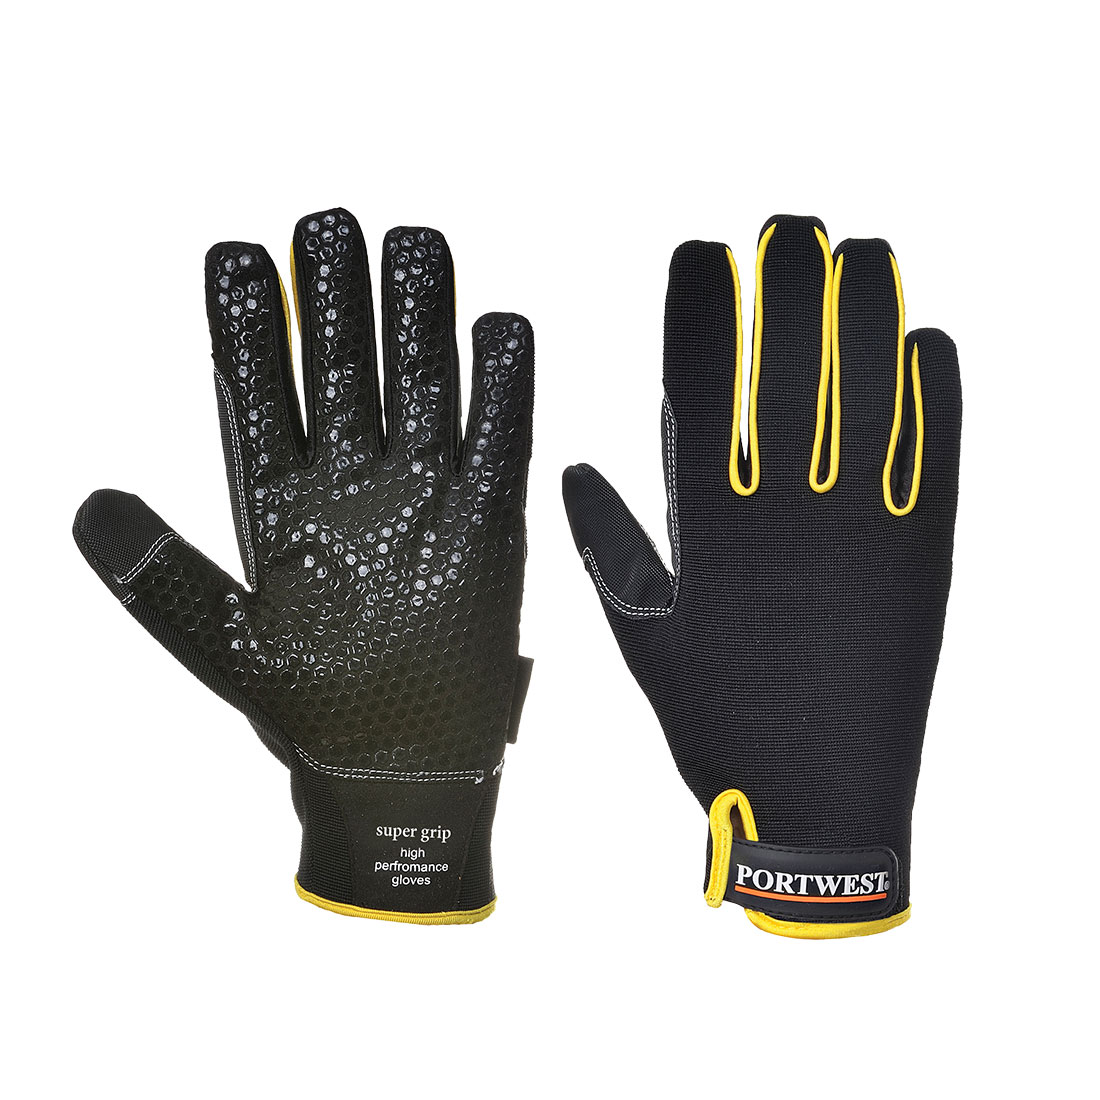 A730波特韦斯特®超级握力高性能机械手套